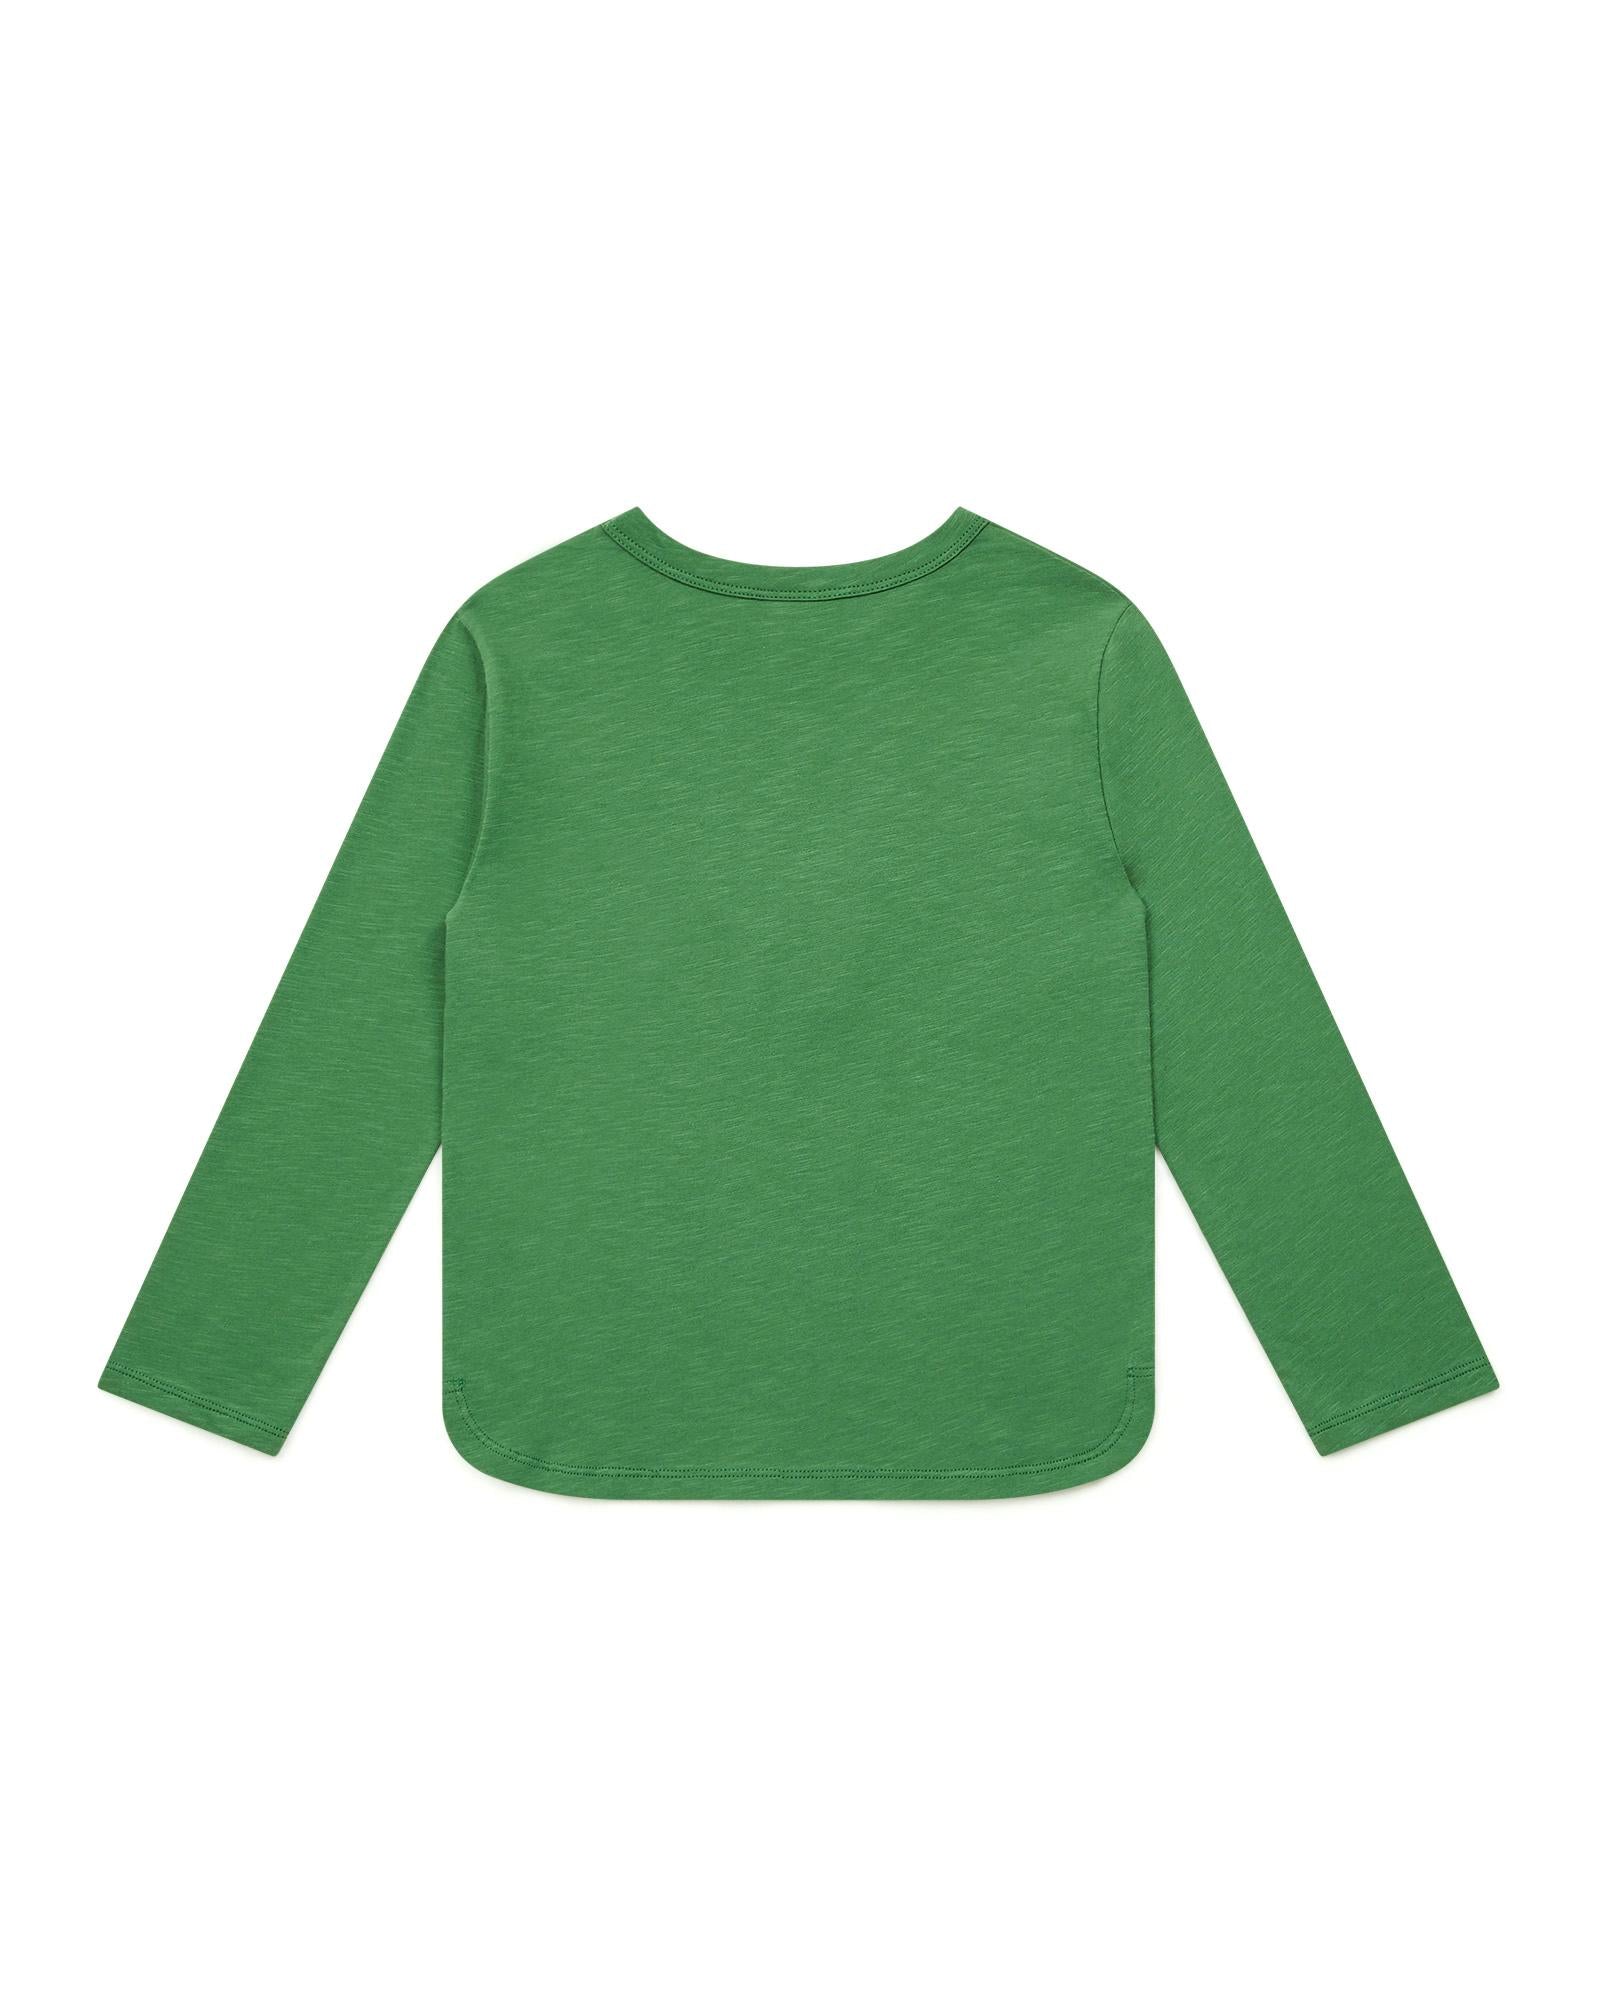 T-shirt Skate vert en coton biologique